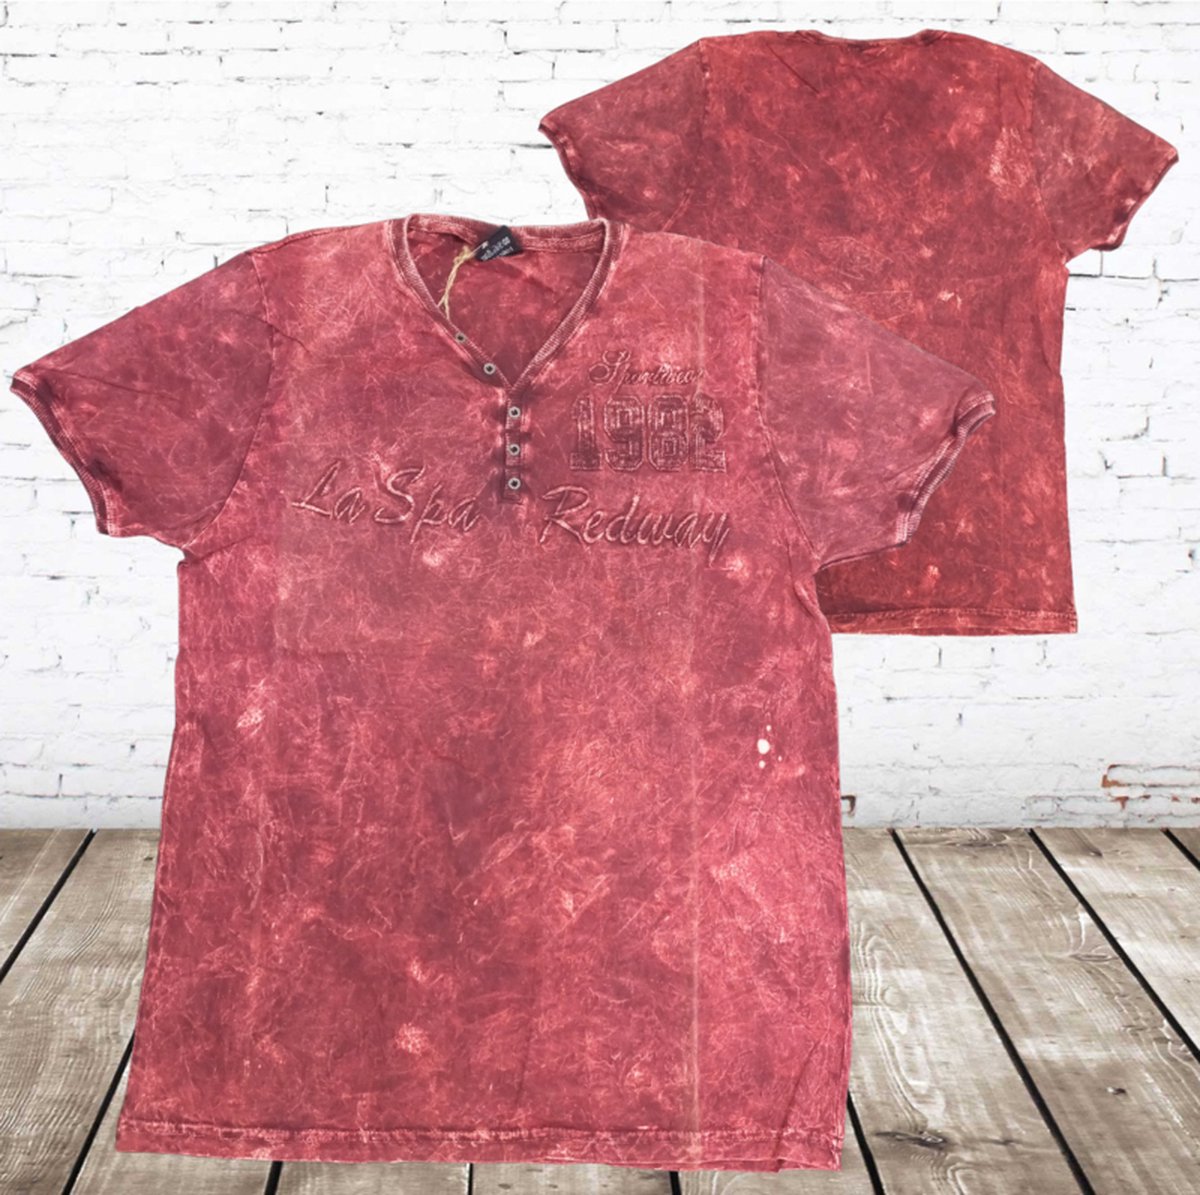 T shirt La spa rood -Violento-M-t-shirts heren